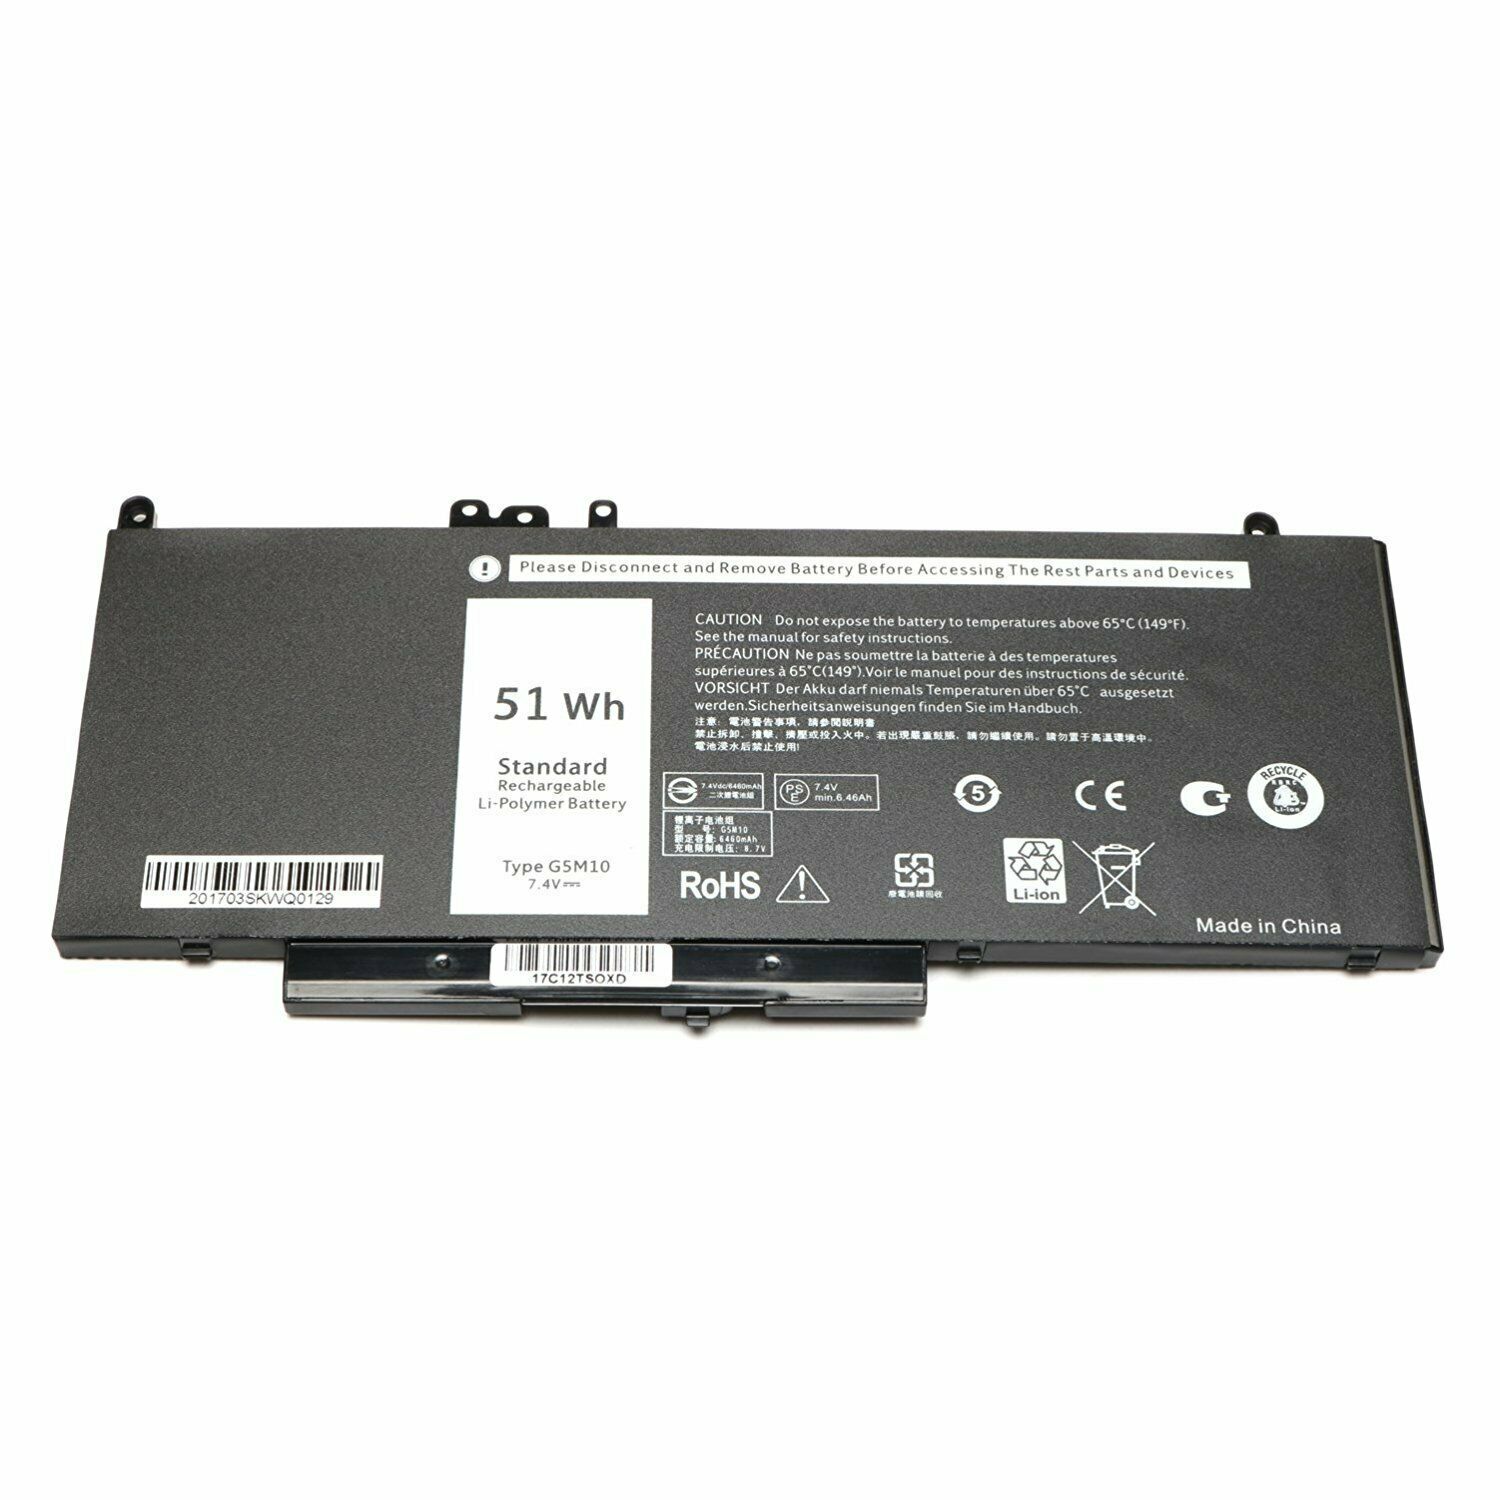 Bateria para G5M10 Dell Latitude E5550 E5450 Notebook 15.6